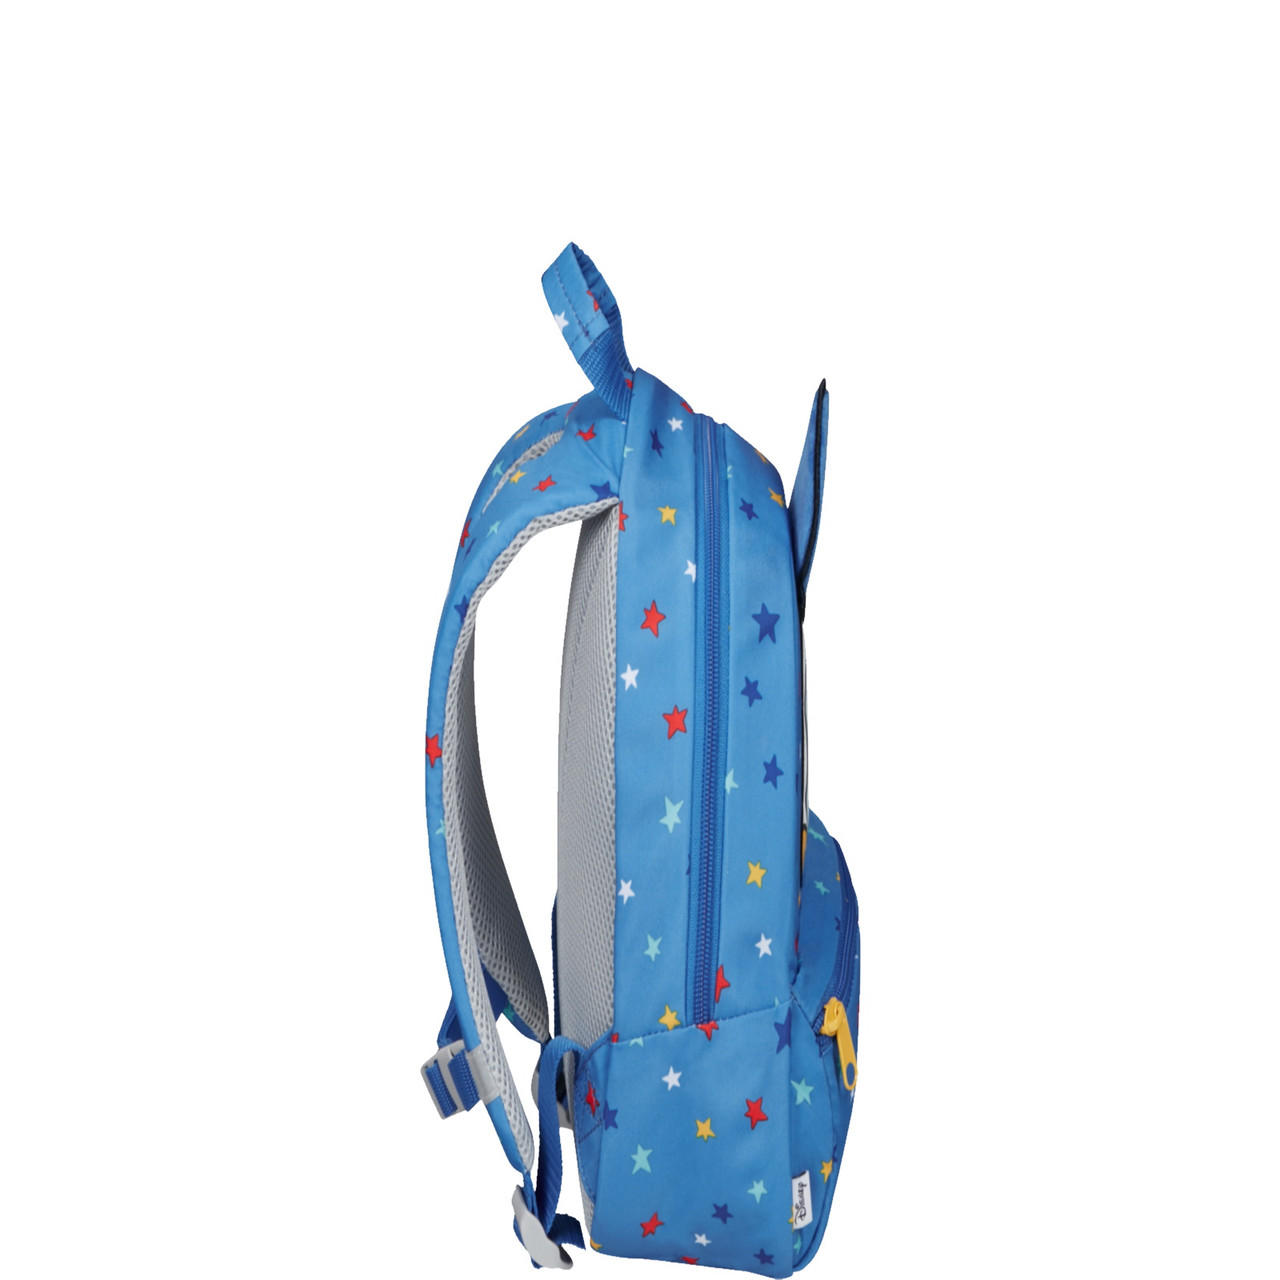 Samsonite Disney Ultimate Stars Superstore Luggage Backpack at 2.0 Donald S